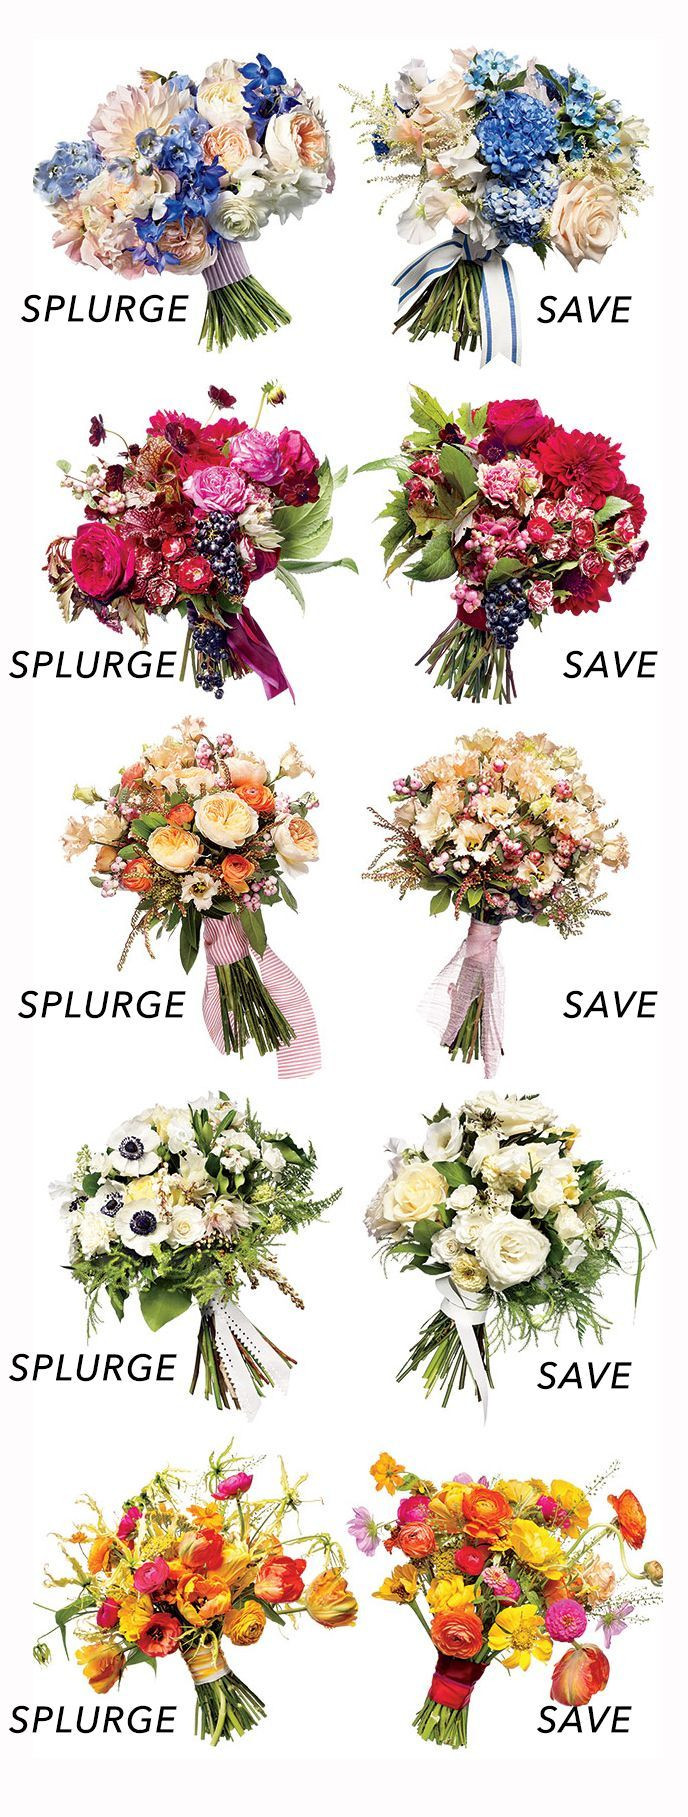 Most Expensive Wedding Flowers
 Save vs Splurge Wedding Bouquets